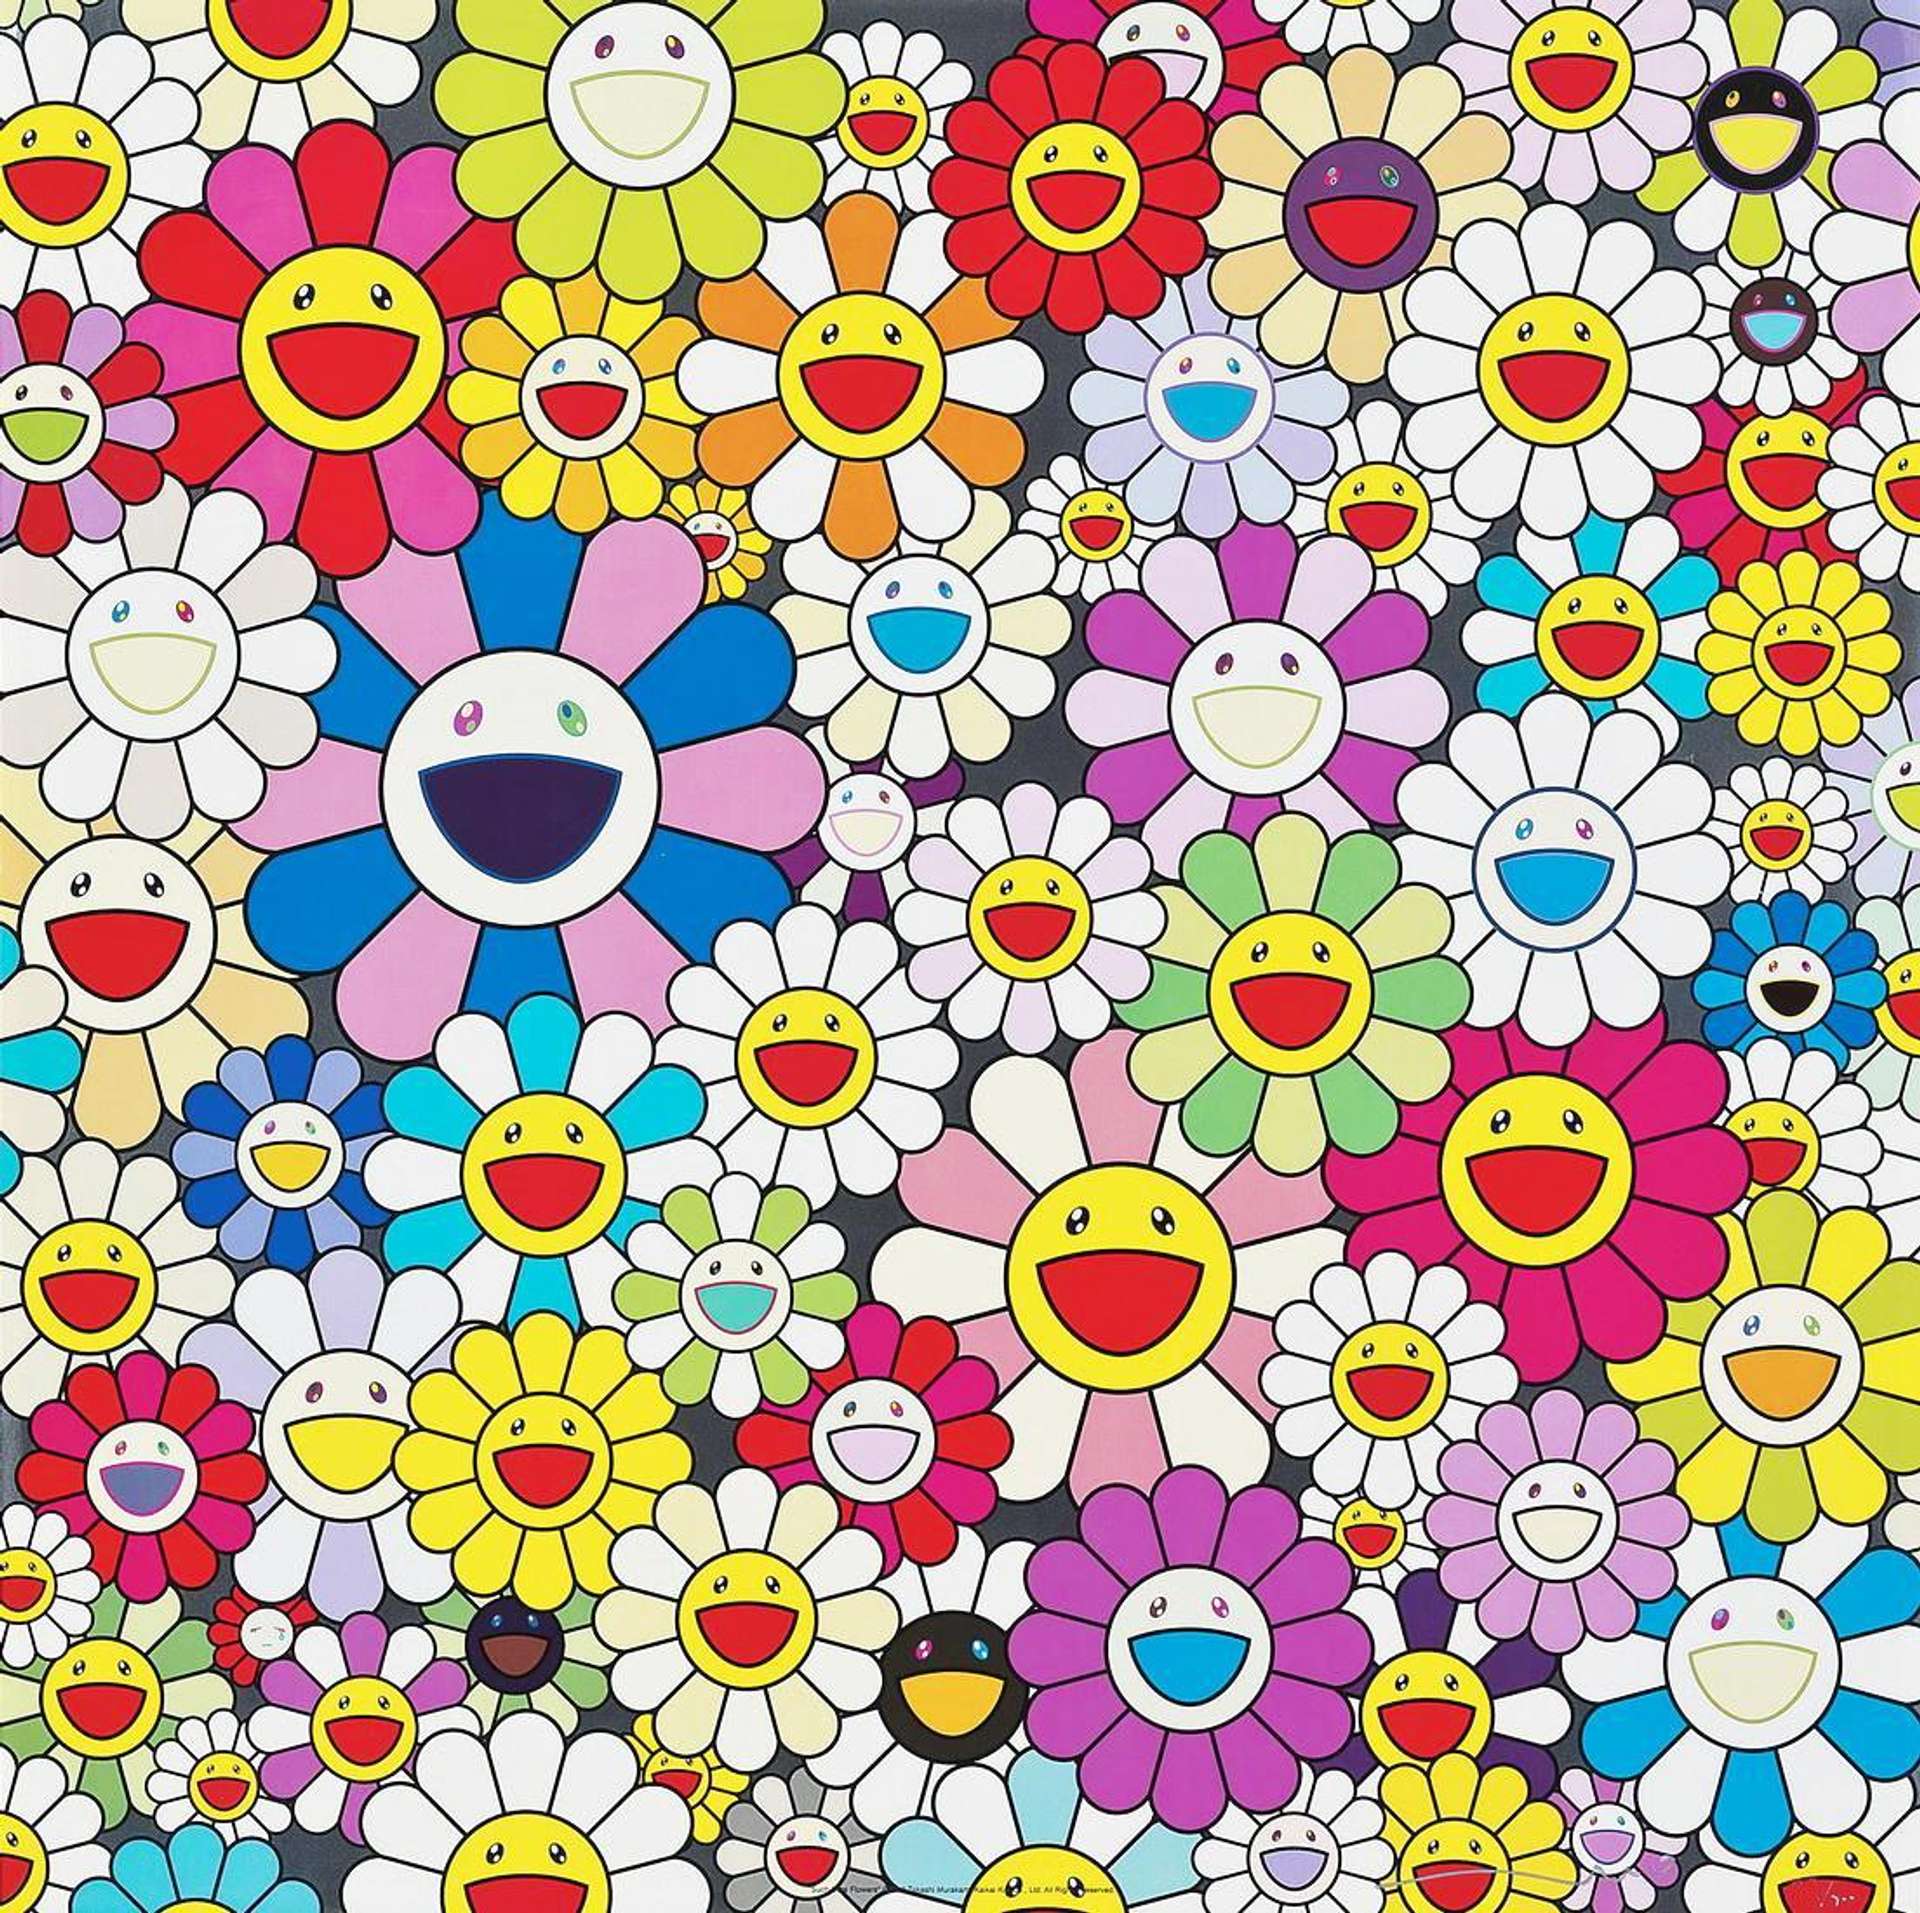 Such Cute Flowers - Signed Print by Takashi Murakami 2010 - MyArtBroker